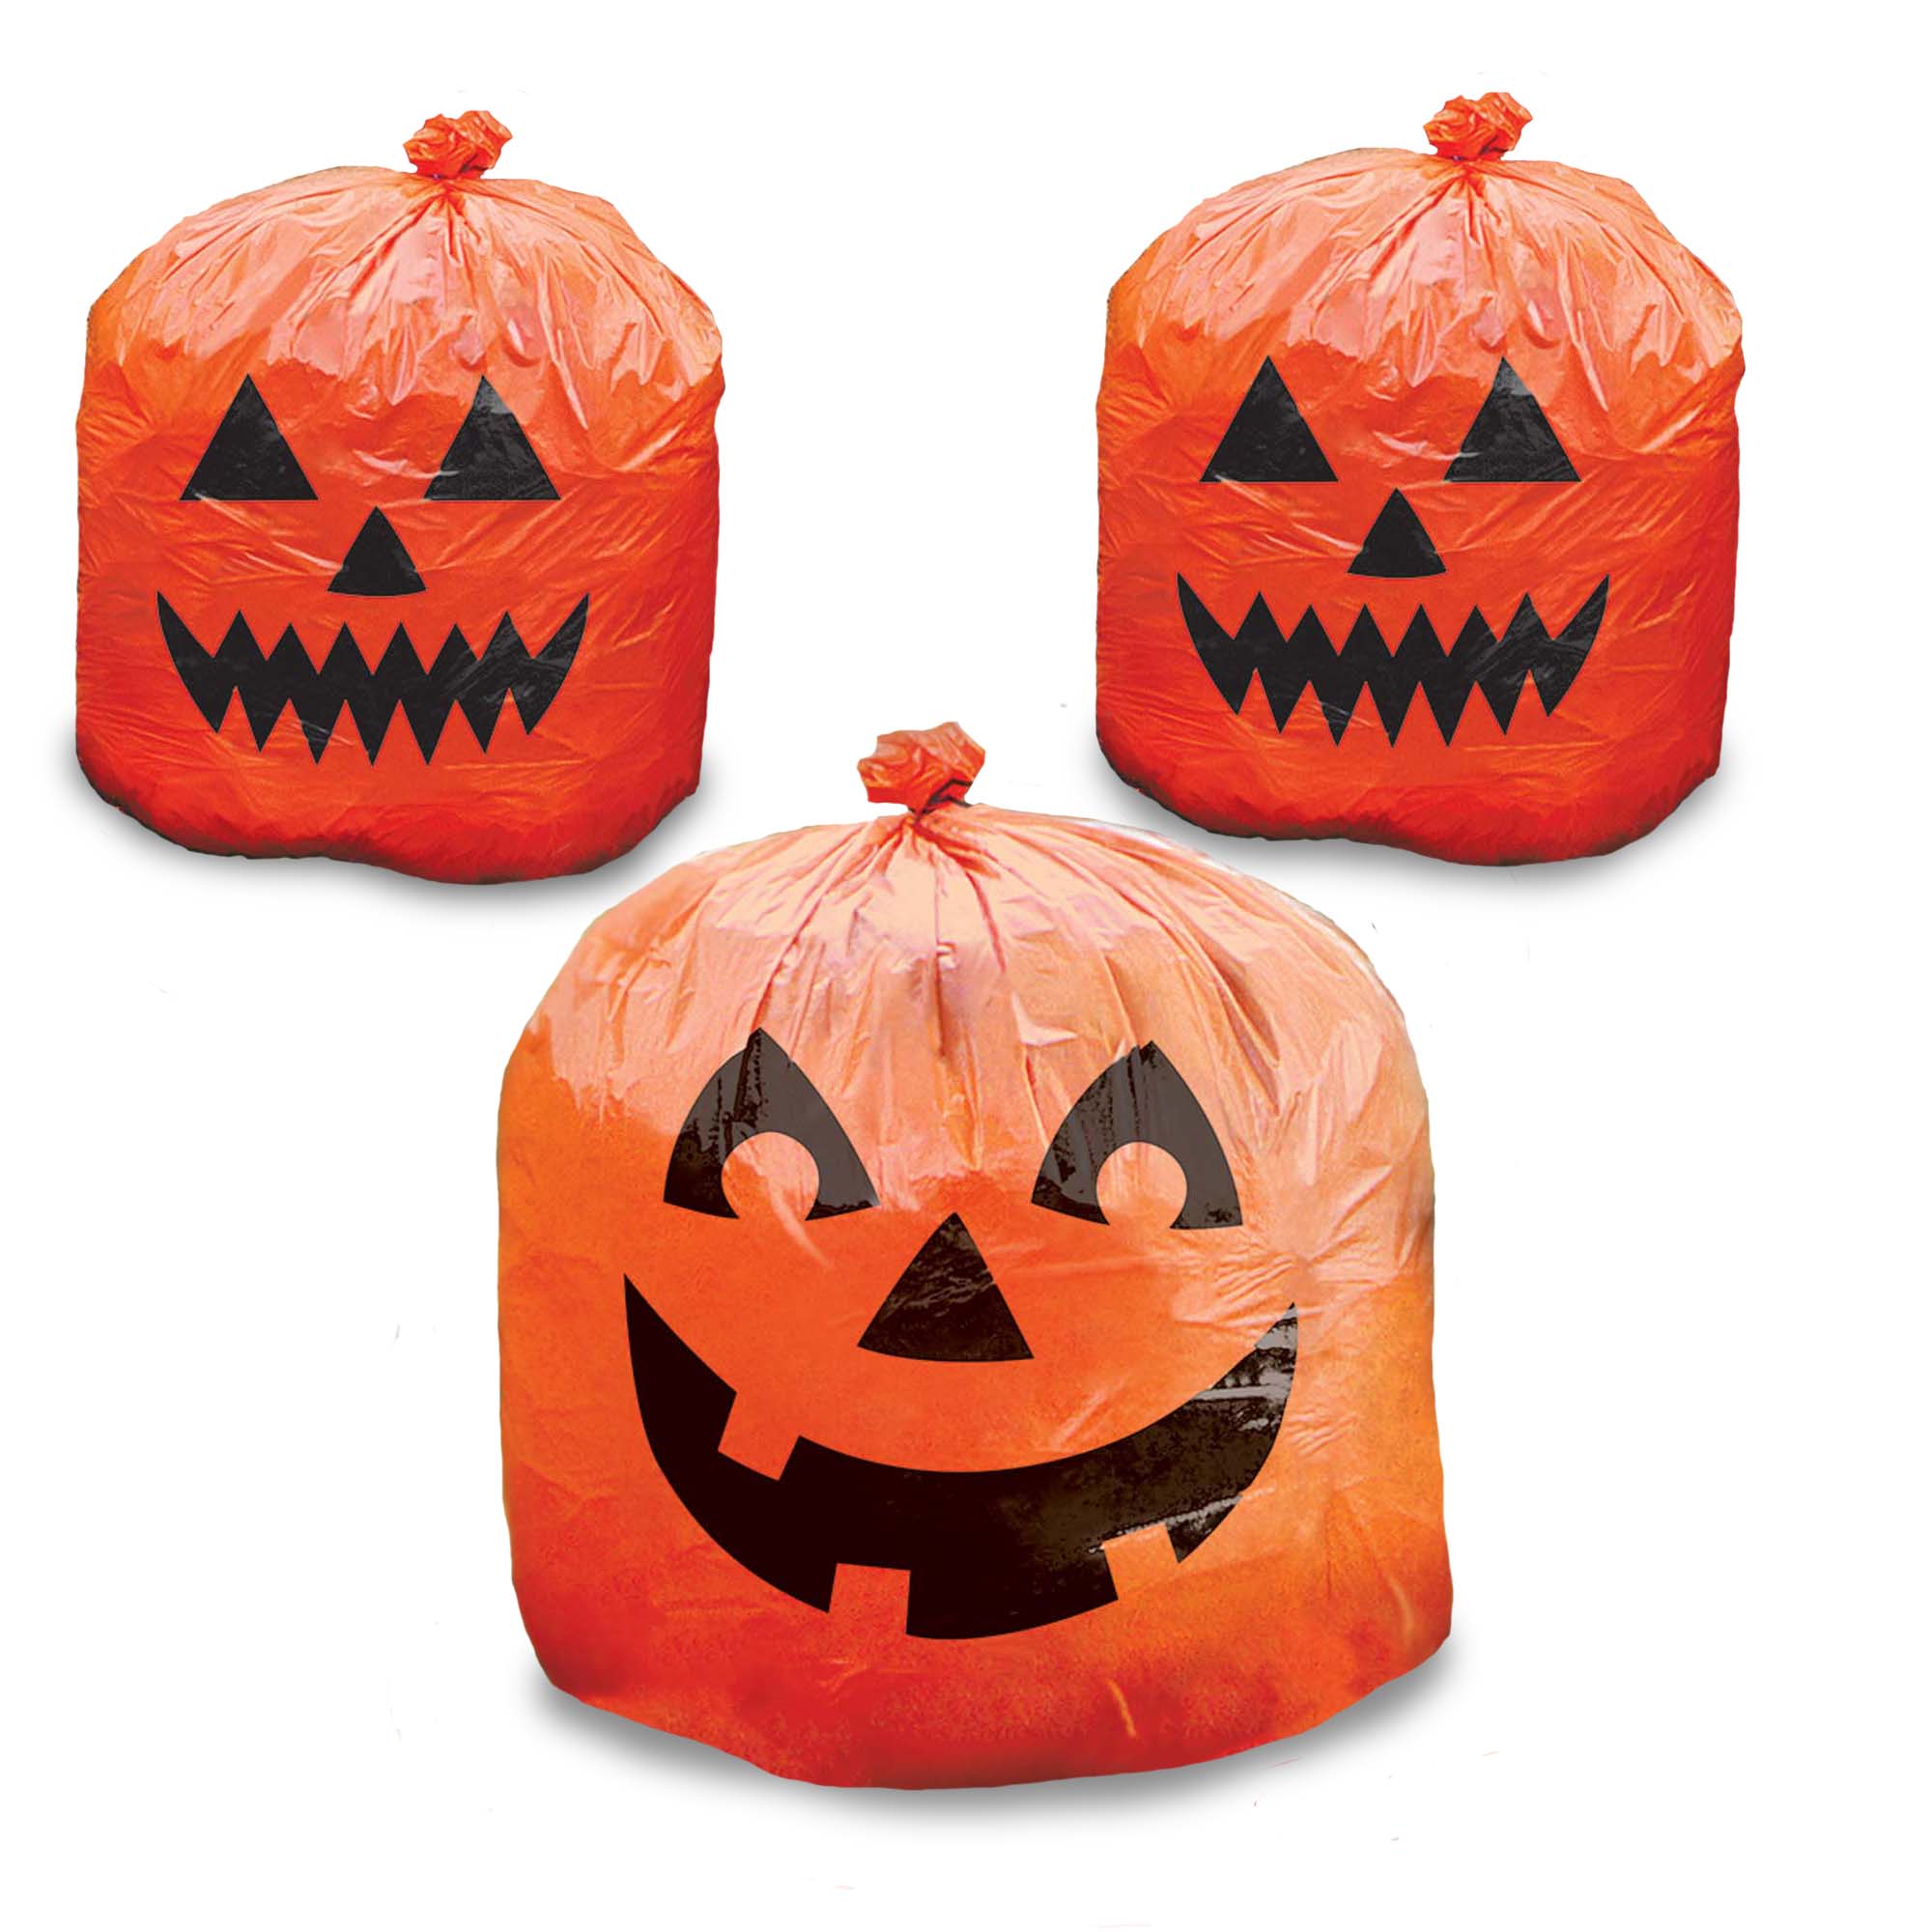 ***New*** 2x Halloween Stuff A Pumpkin Large Leaf Bags Jack O'Lanterns 30" x 24" 